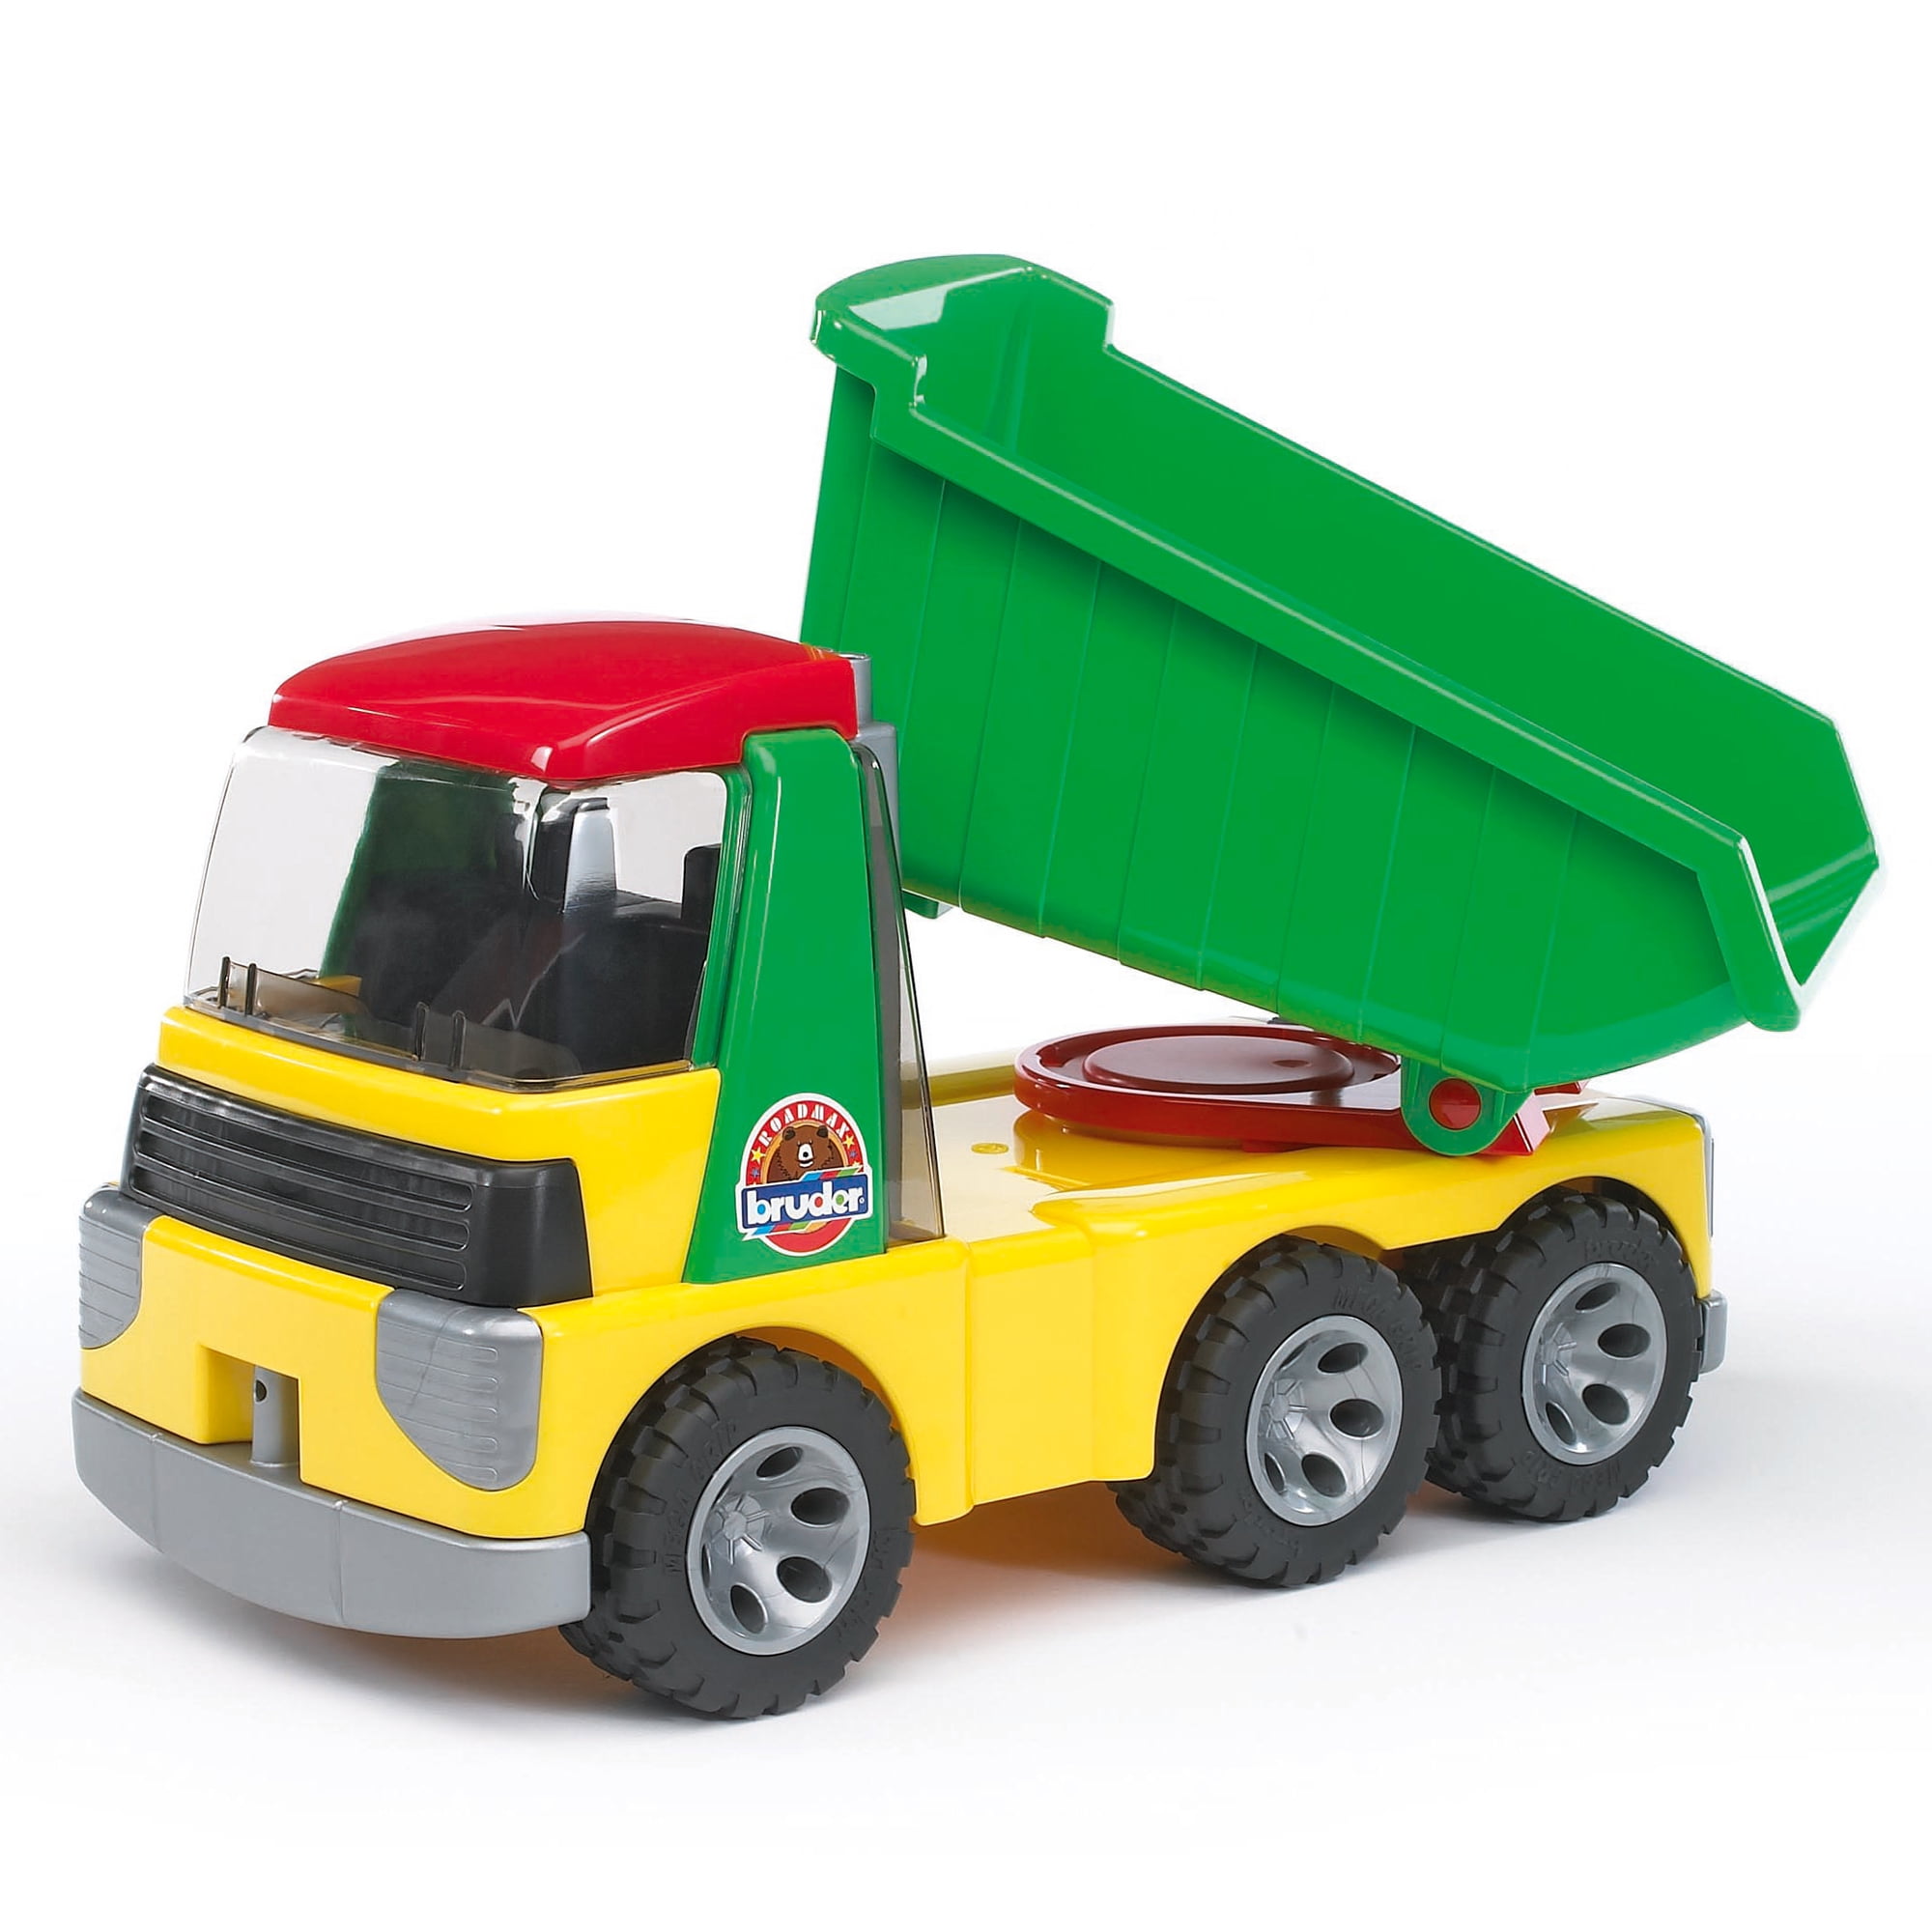 Детские грузовички. Bruder Roadmax грузовик. Машинки для детей Брудер. Bruder Roadmax грузовик с погрузчиком. Грузовик Брудер игрушка.